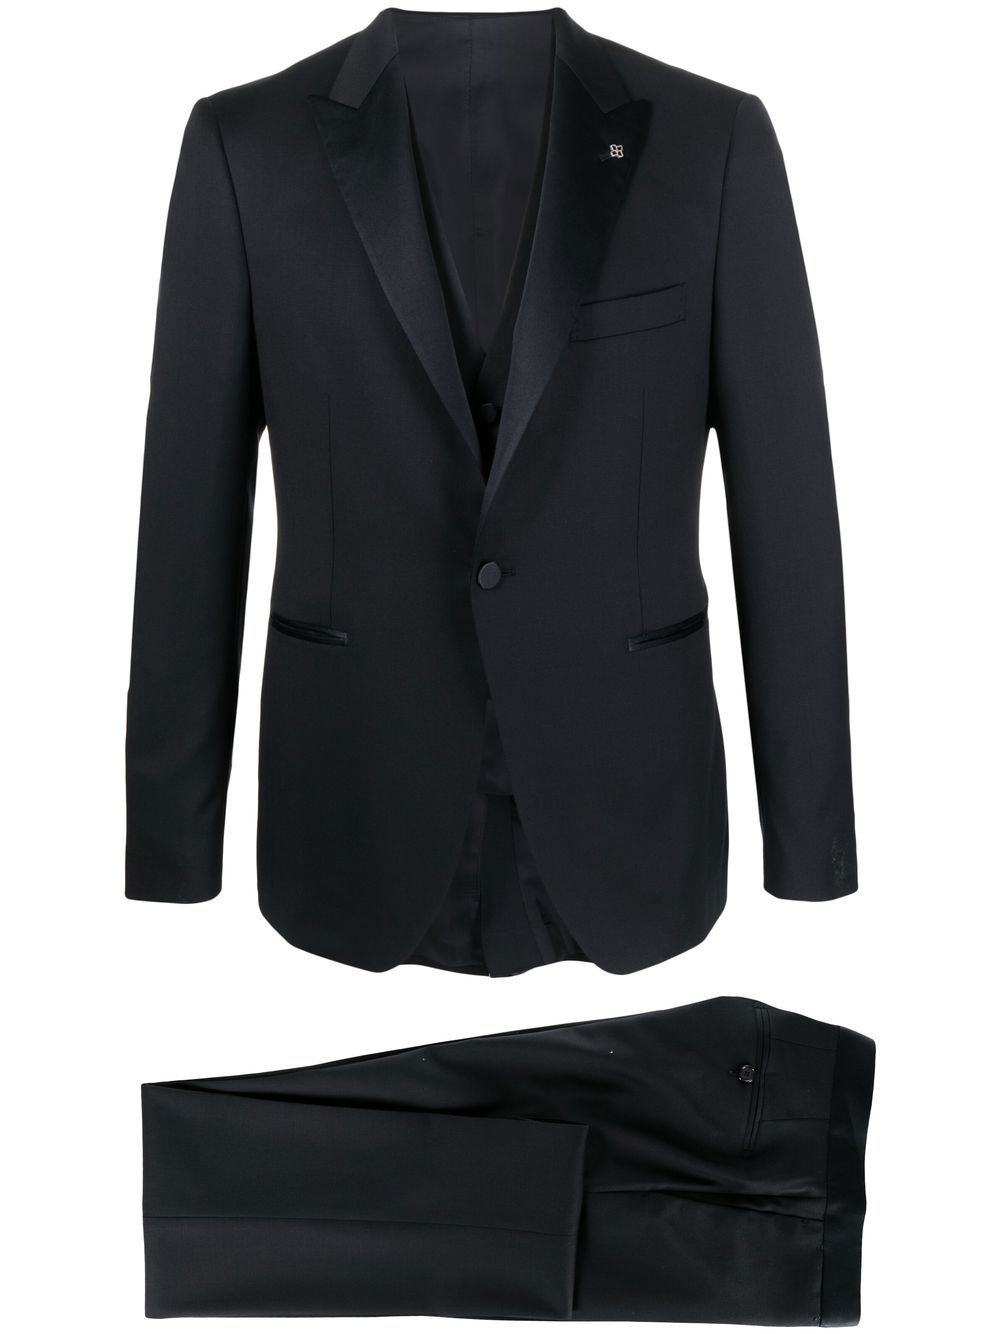 Image 1 of Tagliatore single-breasted tuxedo suit